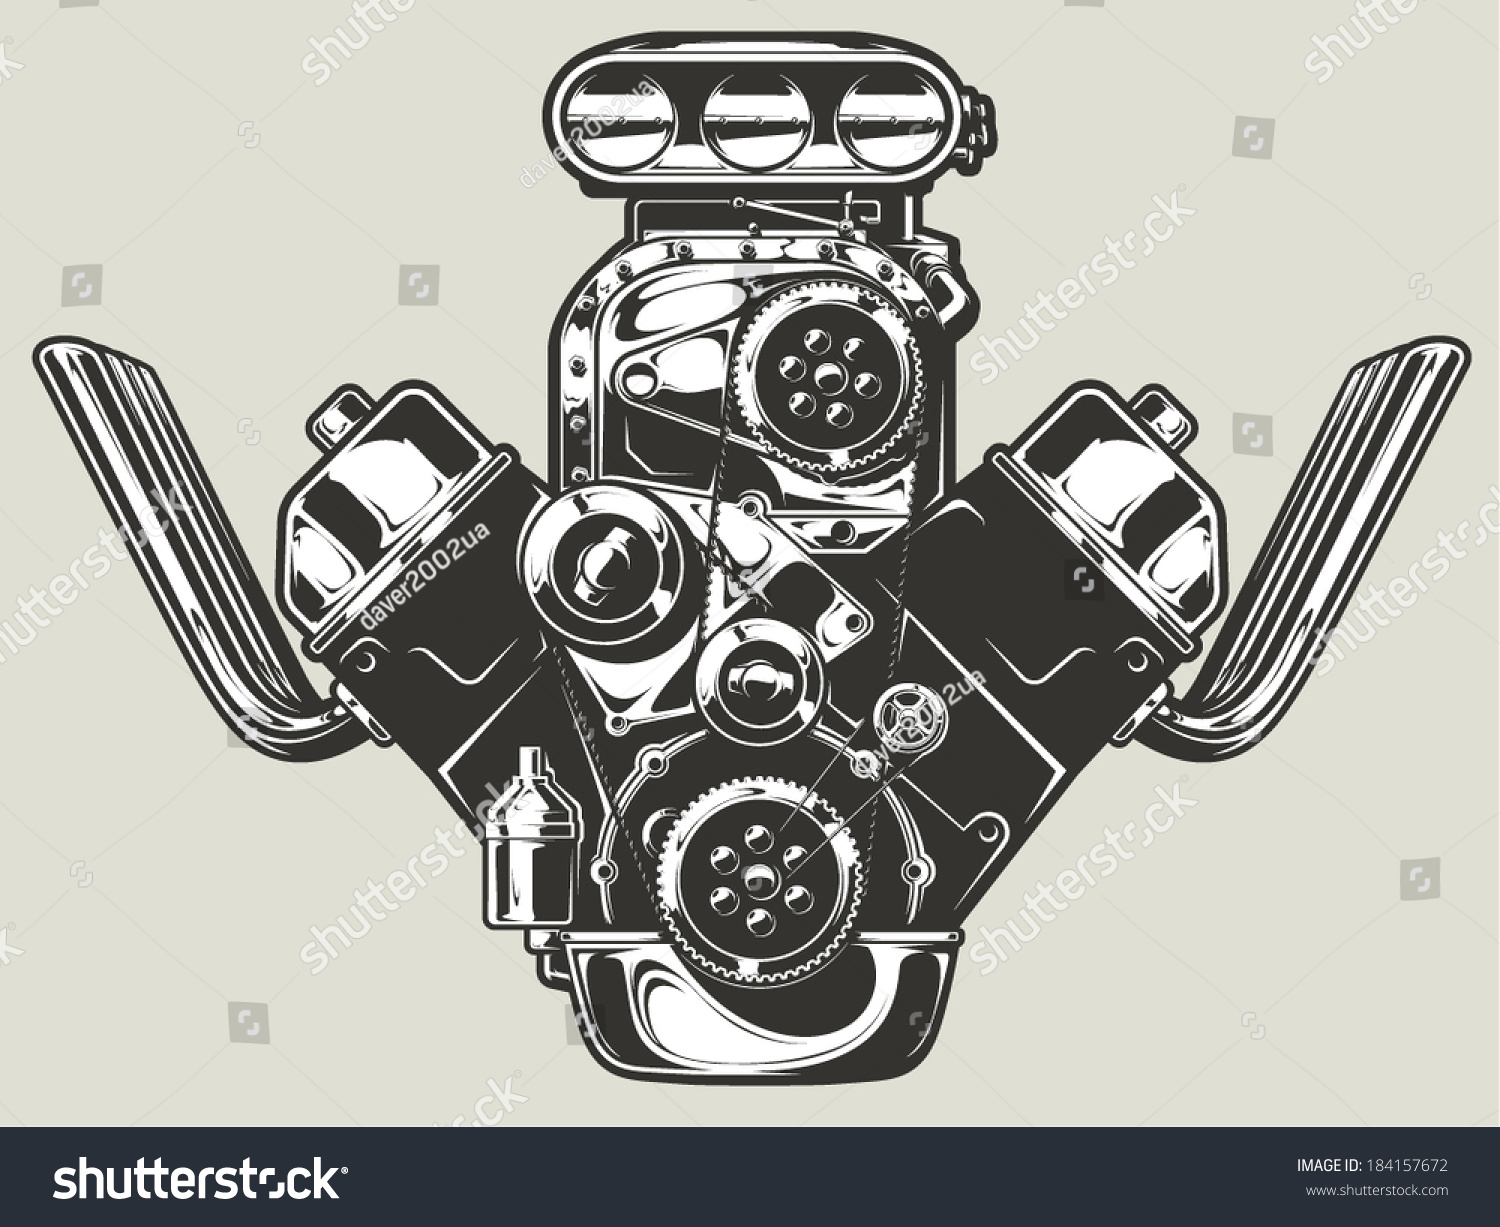 free car engine clipart - photo #46